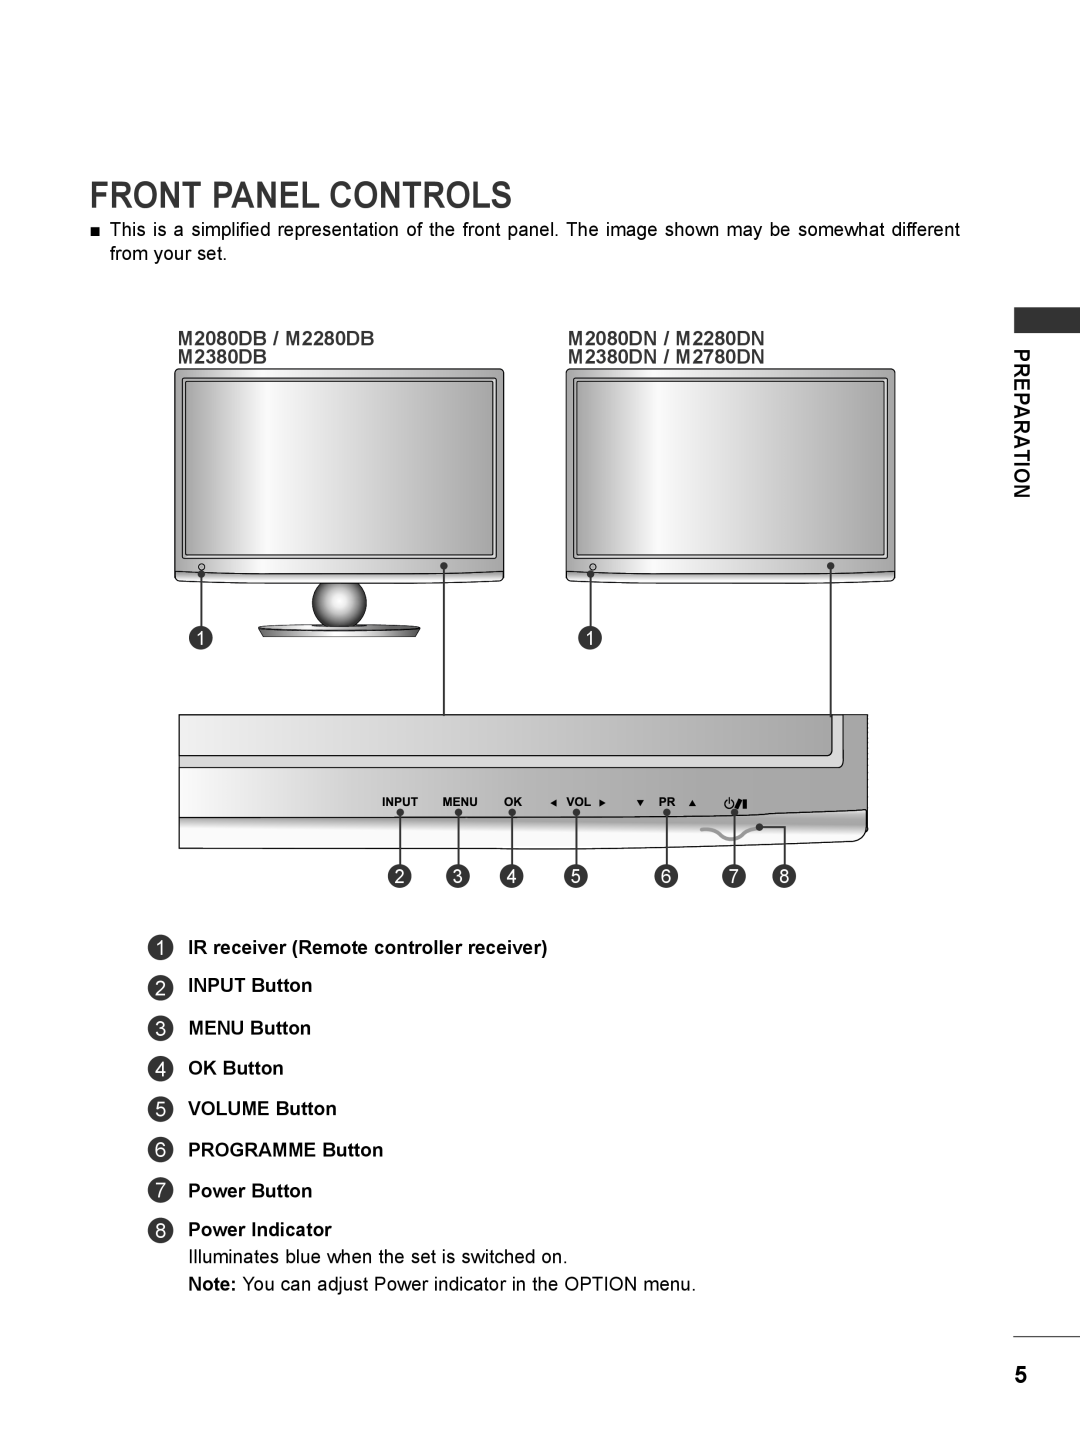 LG Electronics Front Panel Controls, M2080DB / M2280DB, M2380DB, M2080DN / M2280DN, M2380DN / M2780DN, Preparation 